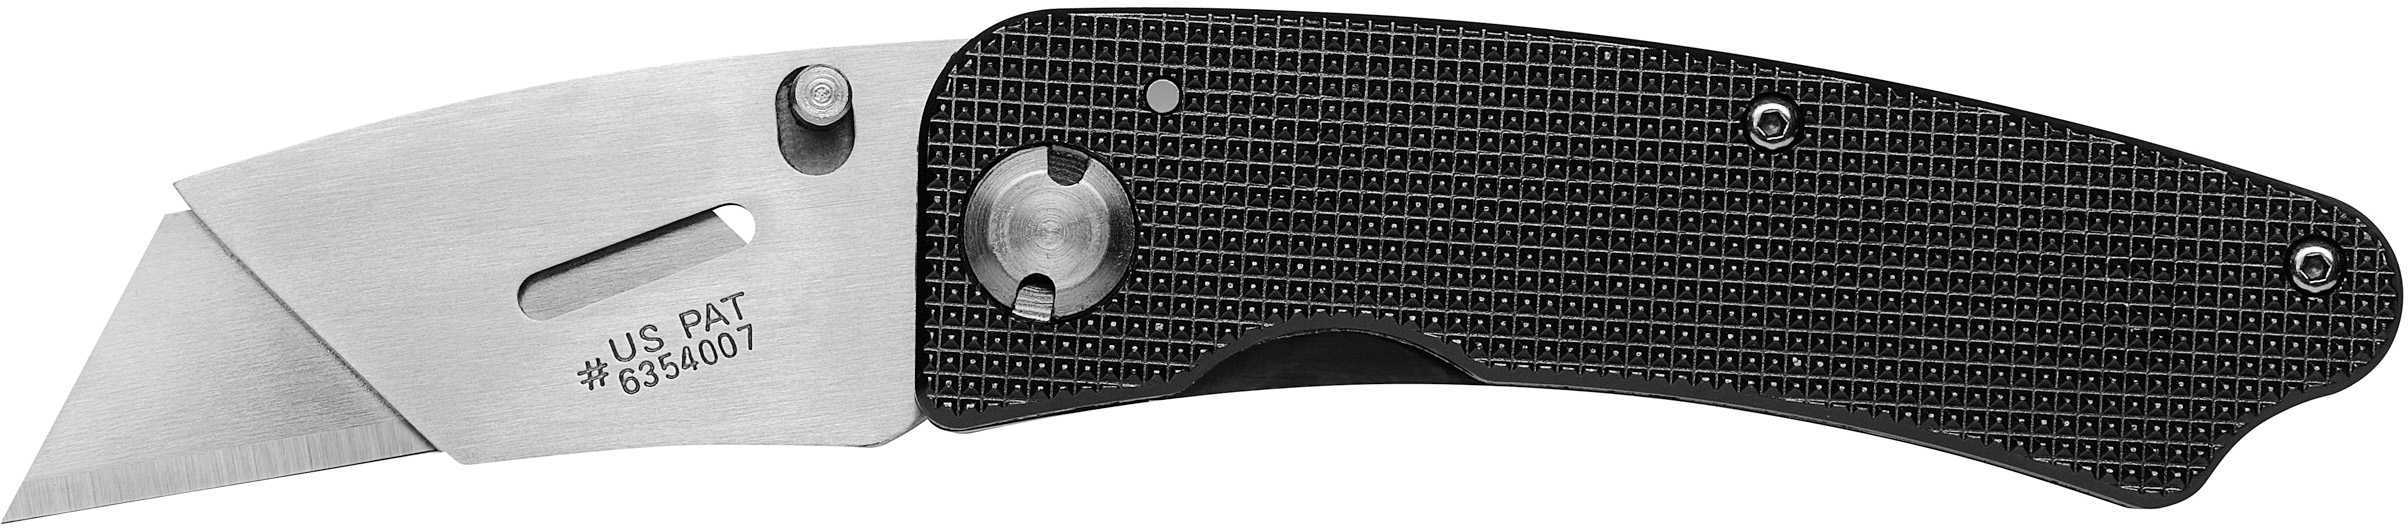 Gerber Blades Edge Black Aluminum Handle 31-000666